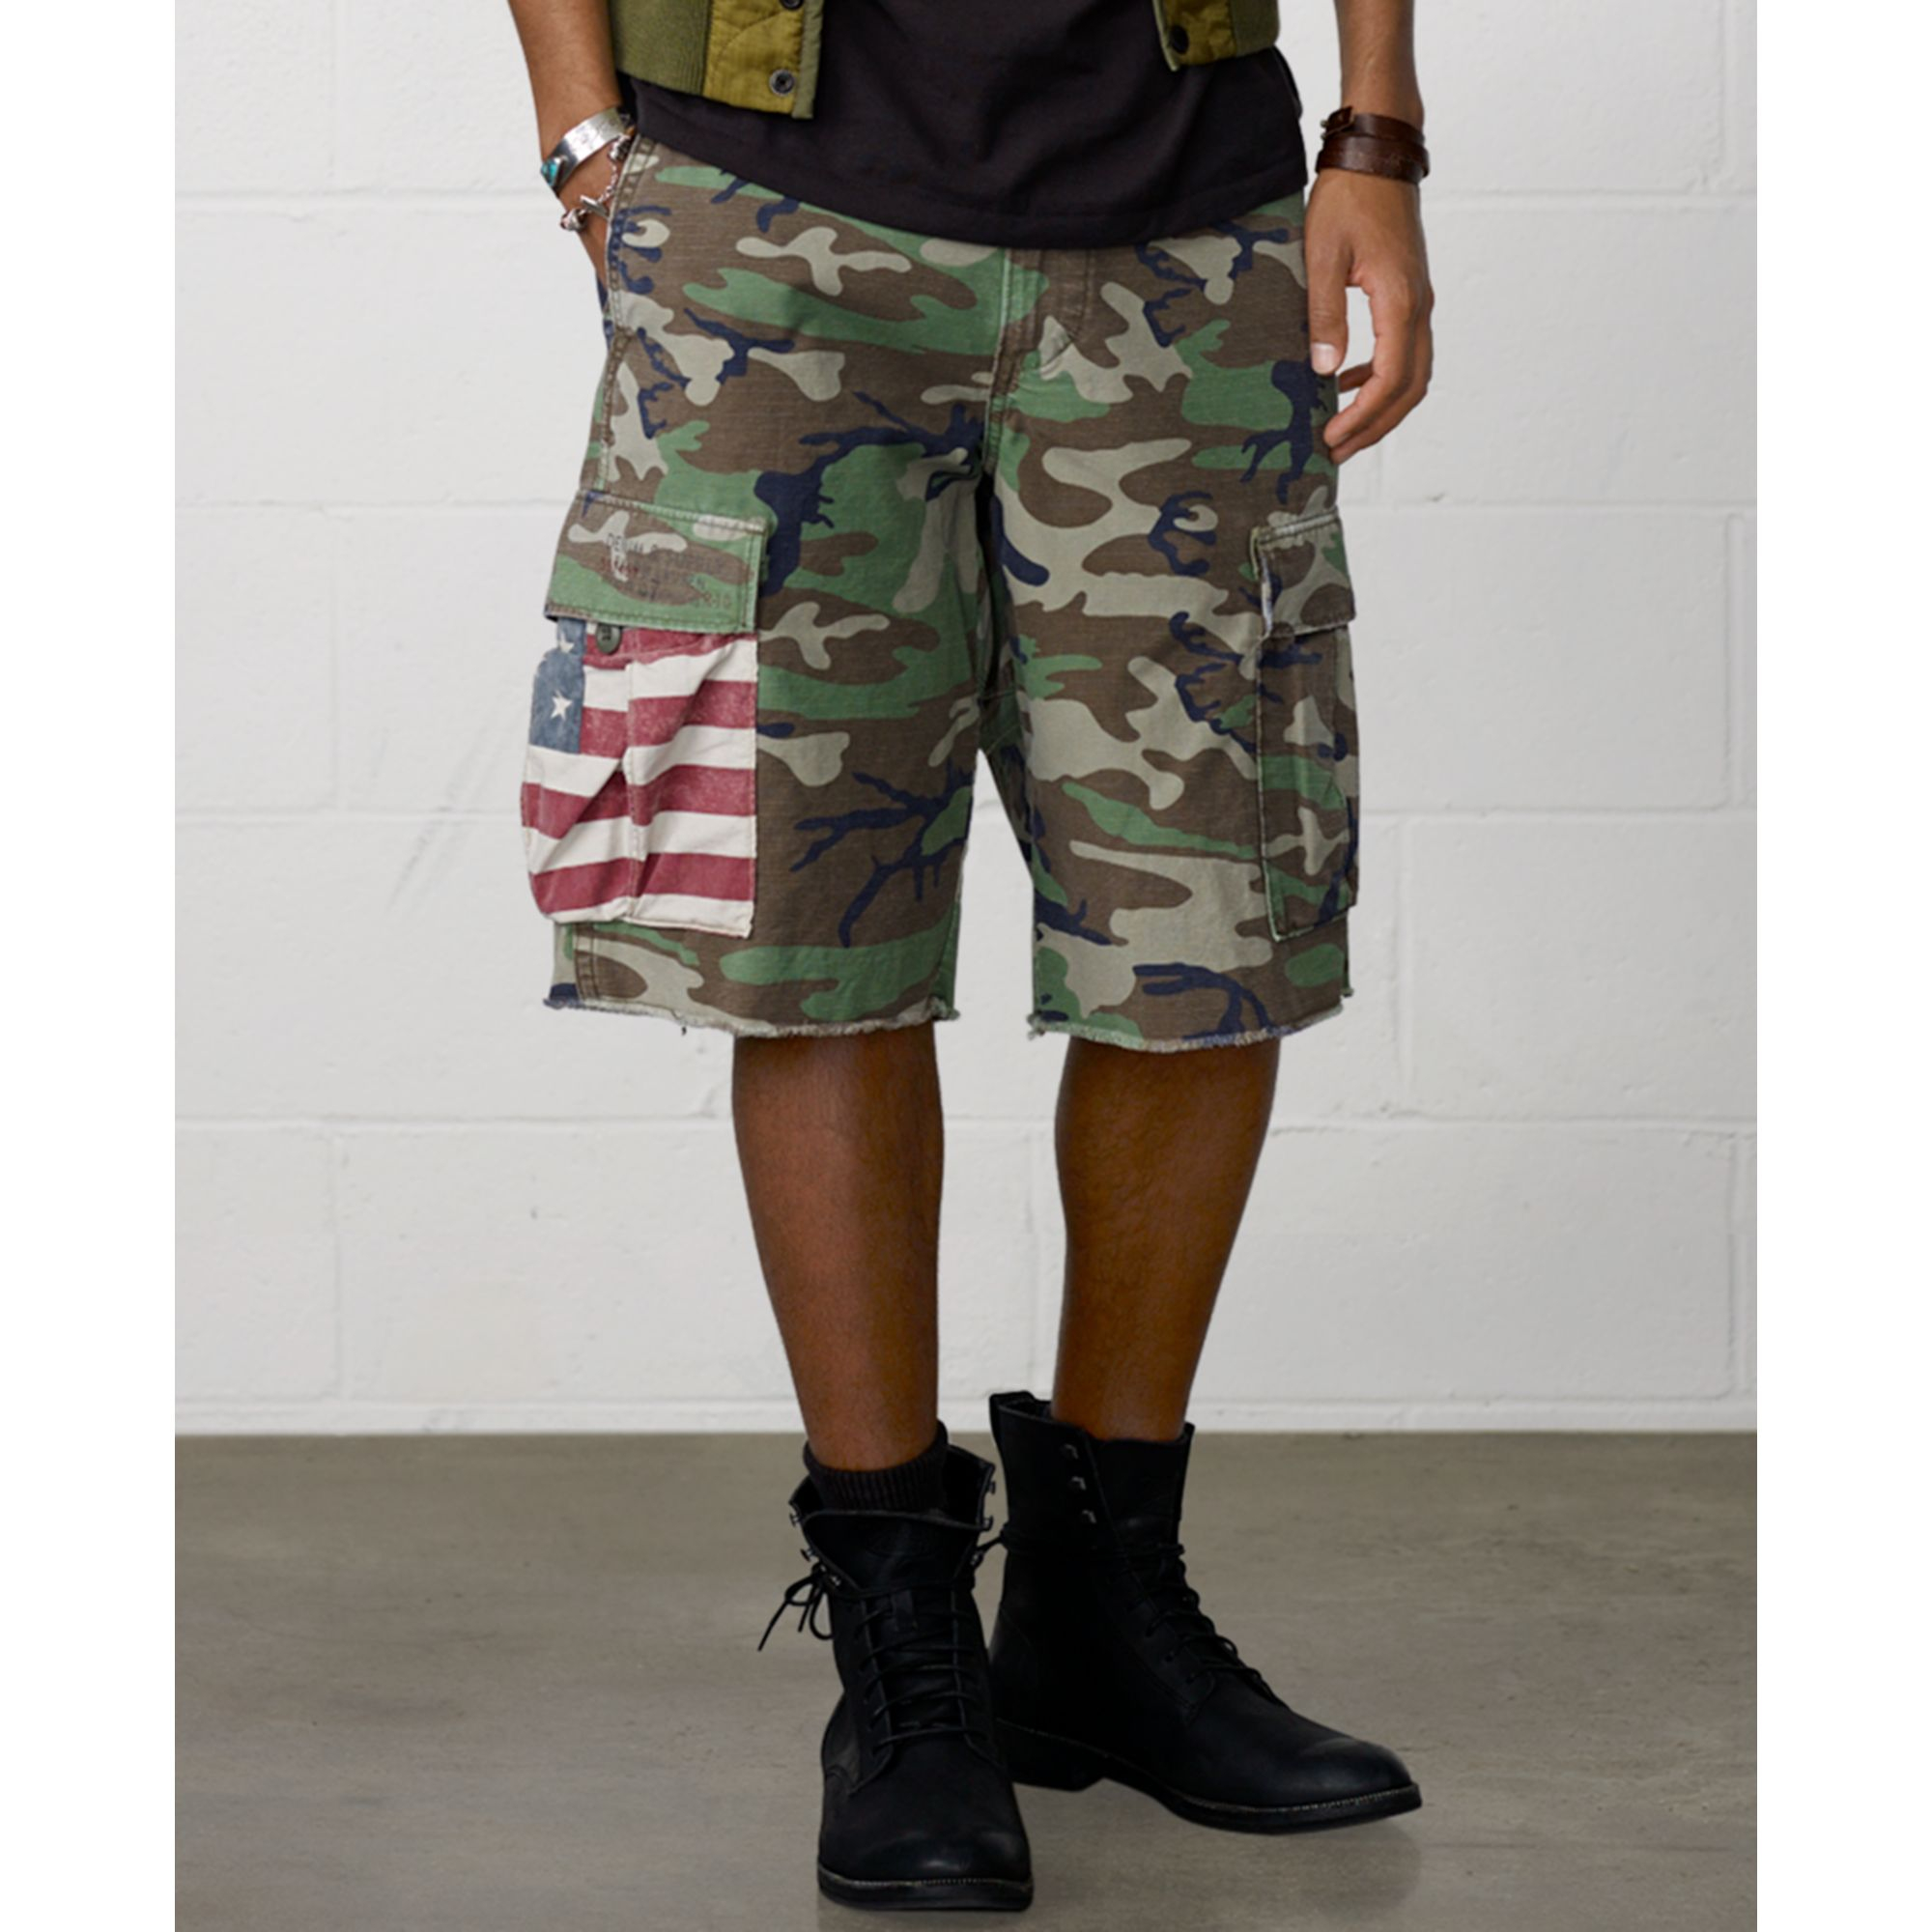 Lyst - Denim & Supply Ralph Lauren Cut-Off Military Camo Cargo Shorts ...